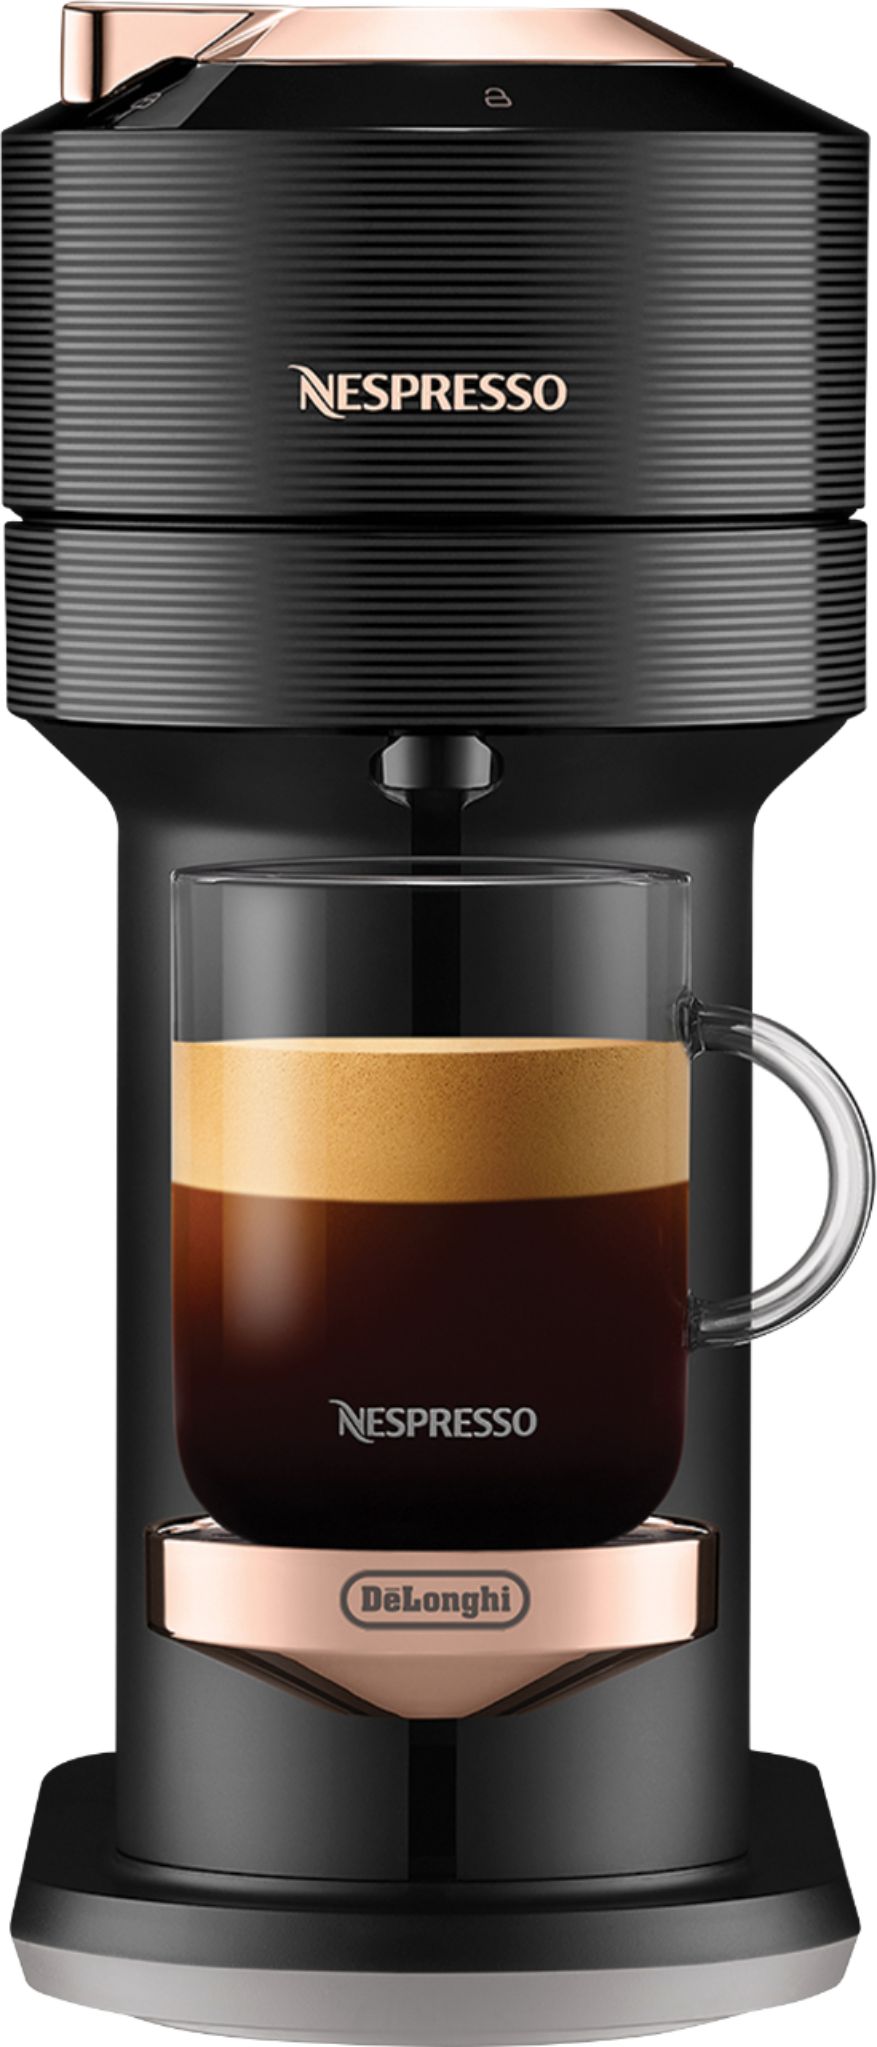 Left View: Nespresso Vertuo Next Premium Coffee and Espresso Maker by De'Longhi,  Black Rose Gold - Black Rose Gold